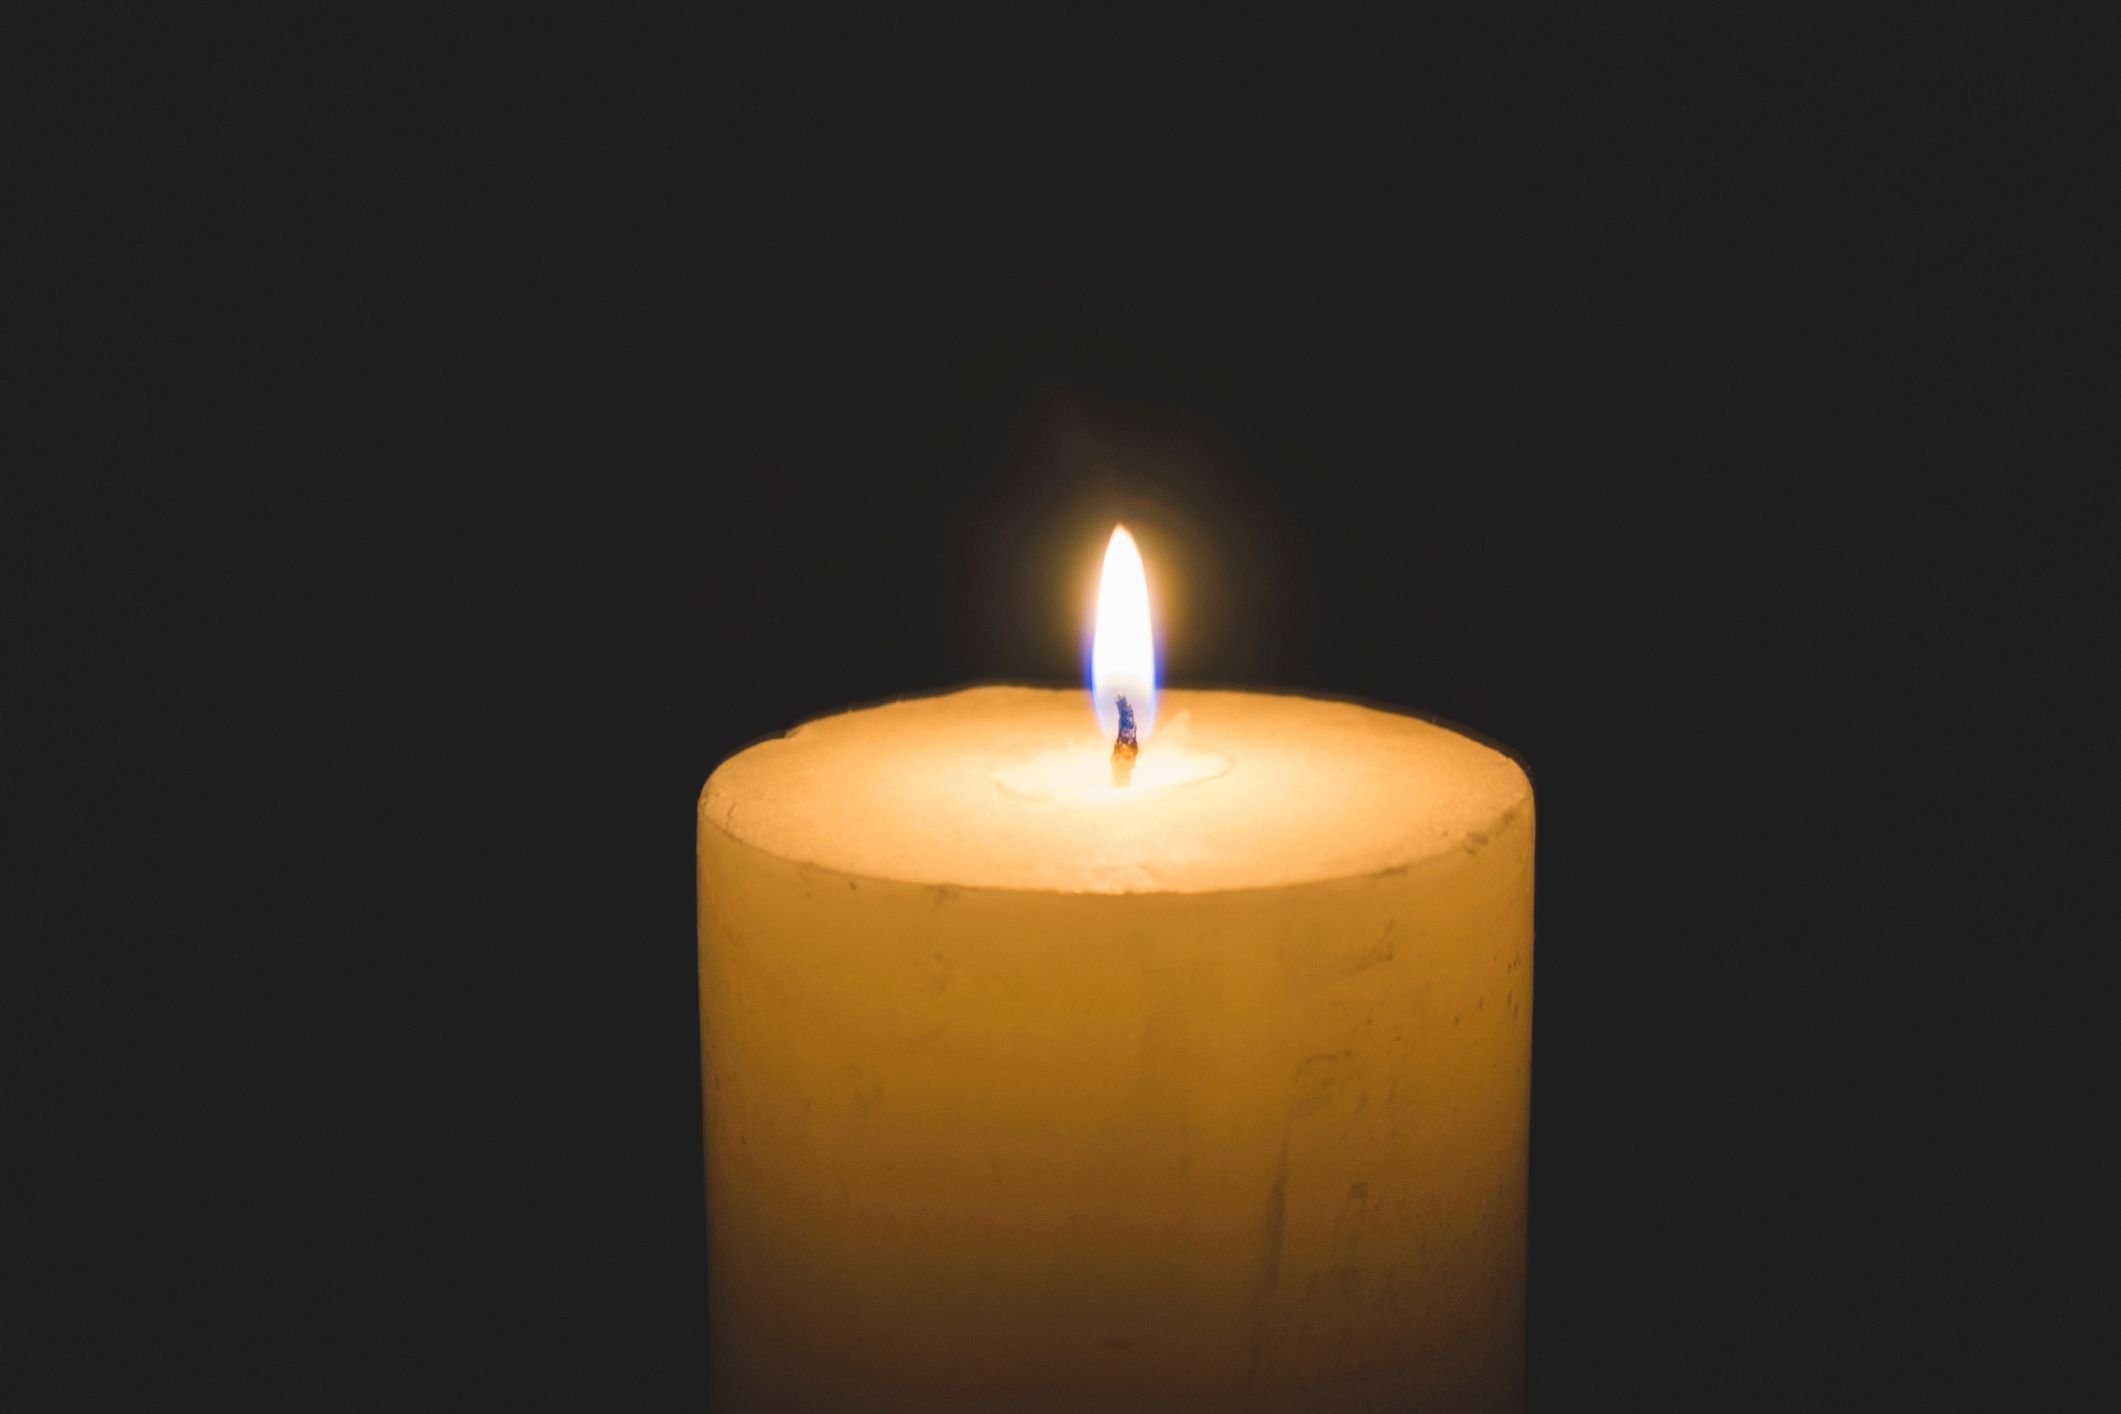 Eine brennende Kerze. | Quelle: Stock Fotografie via Shutterstock